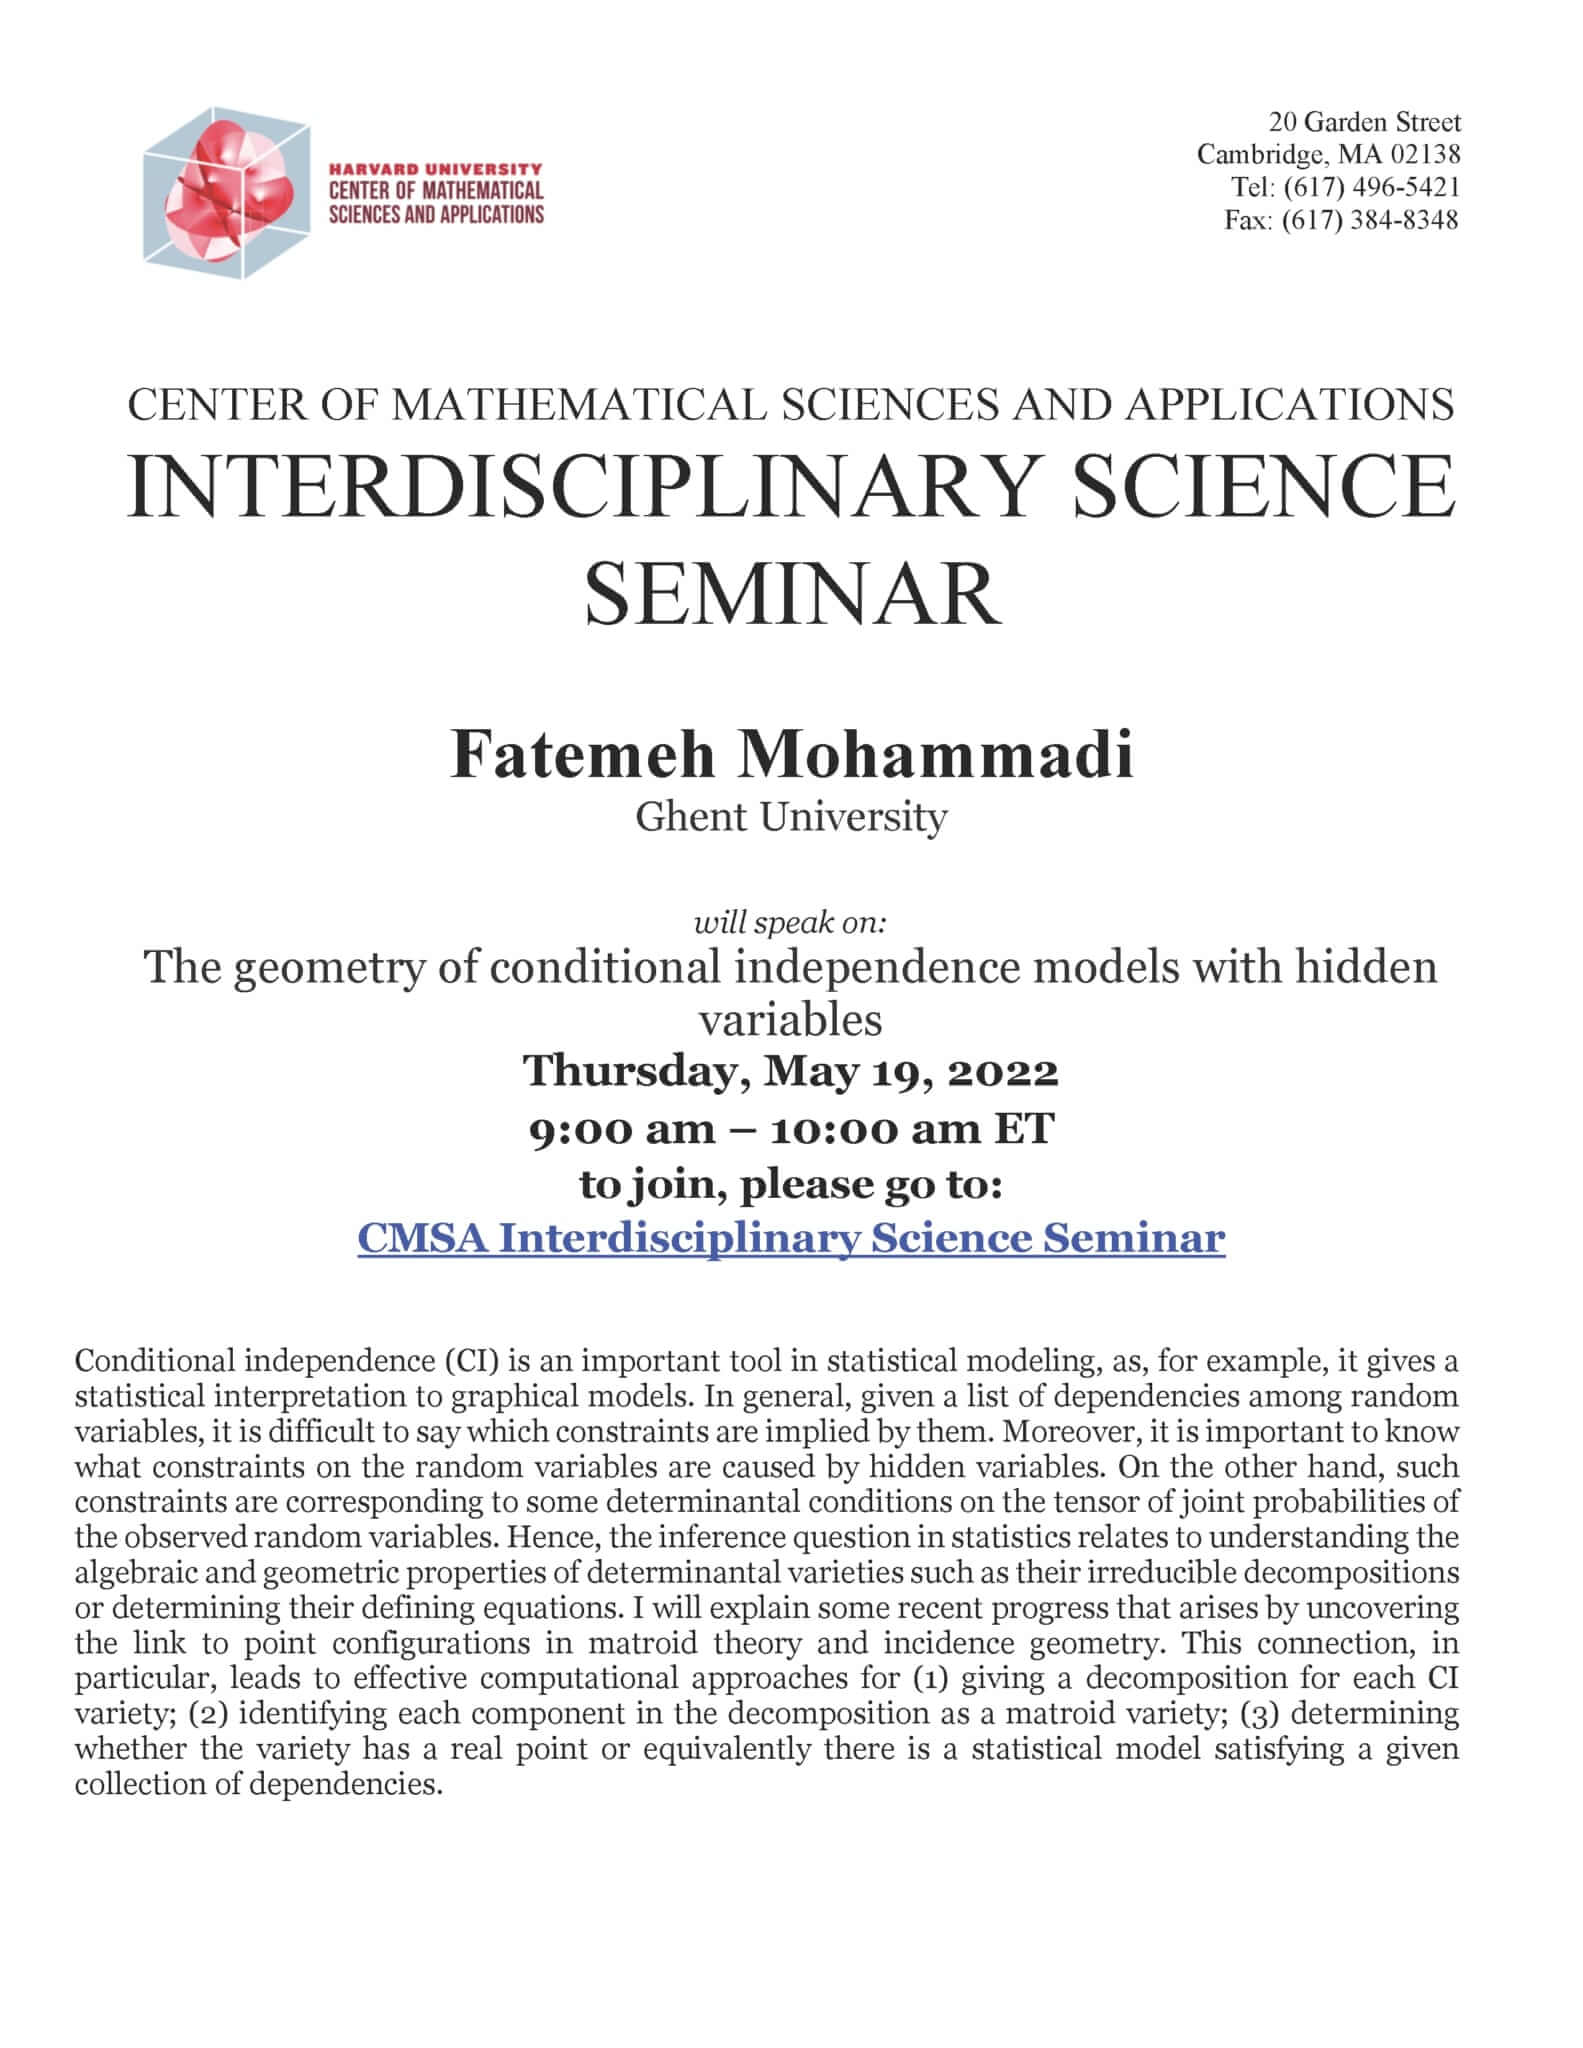 CMSA-Interdisciplinary-Science-Seminar-05.19.22-1583x2048-1